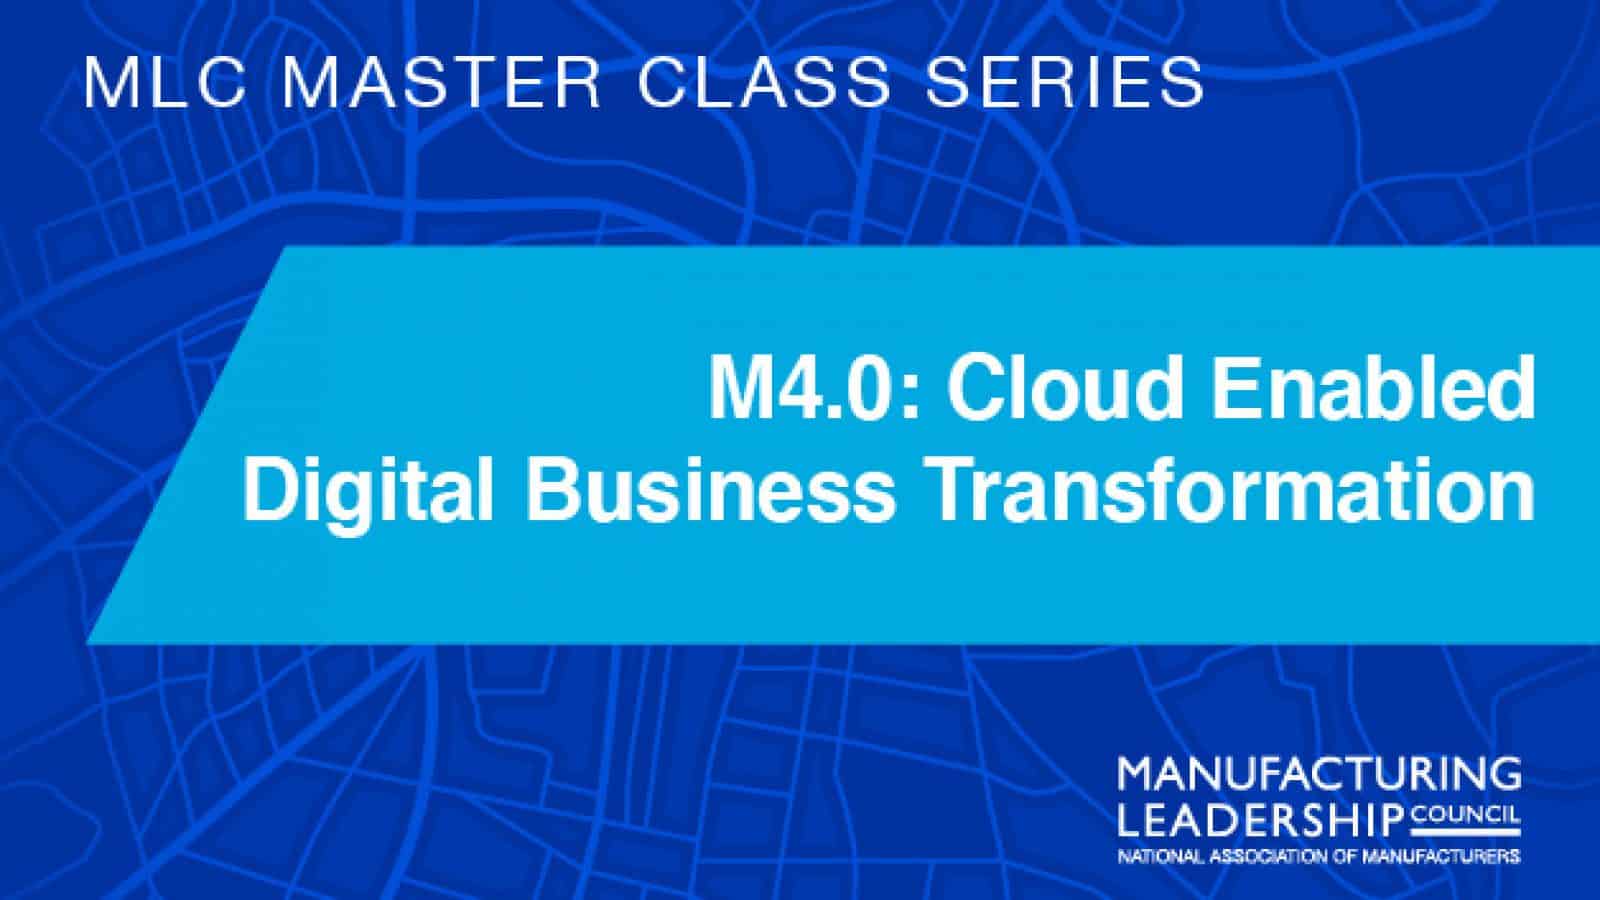 M4.0: Cloud Enabled Digital Business Transformation